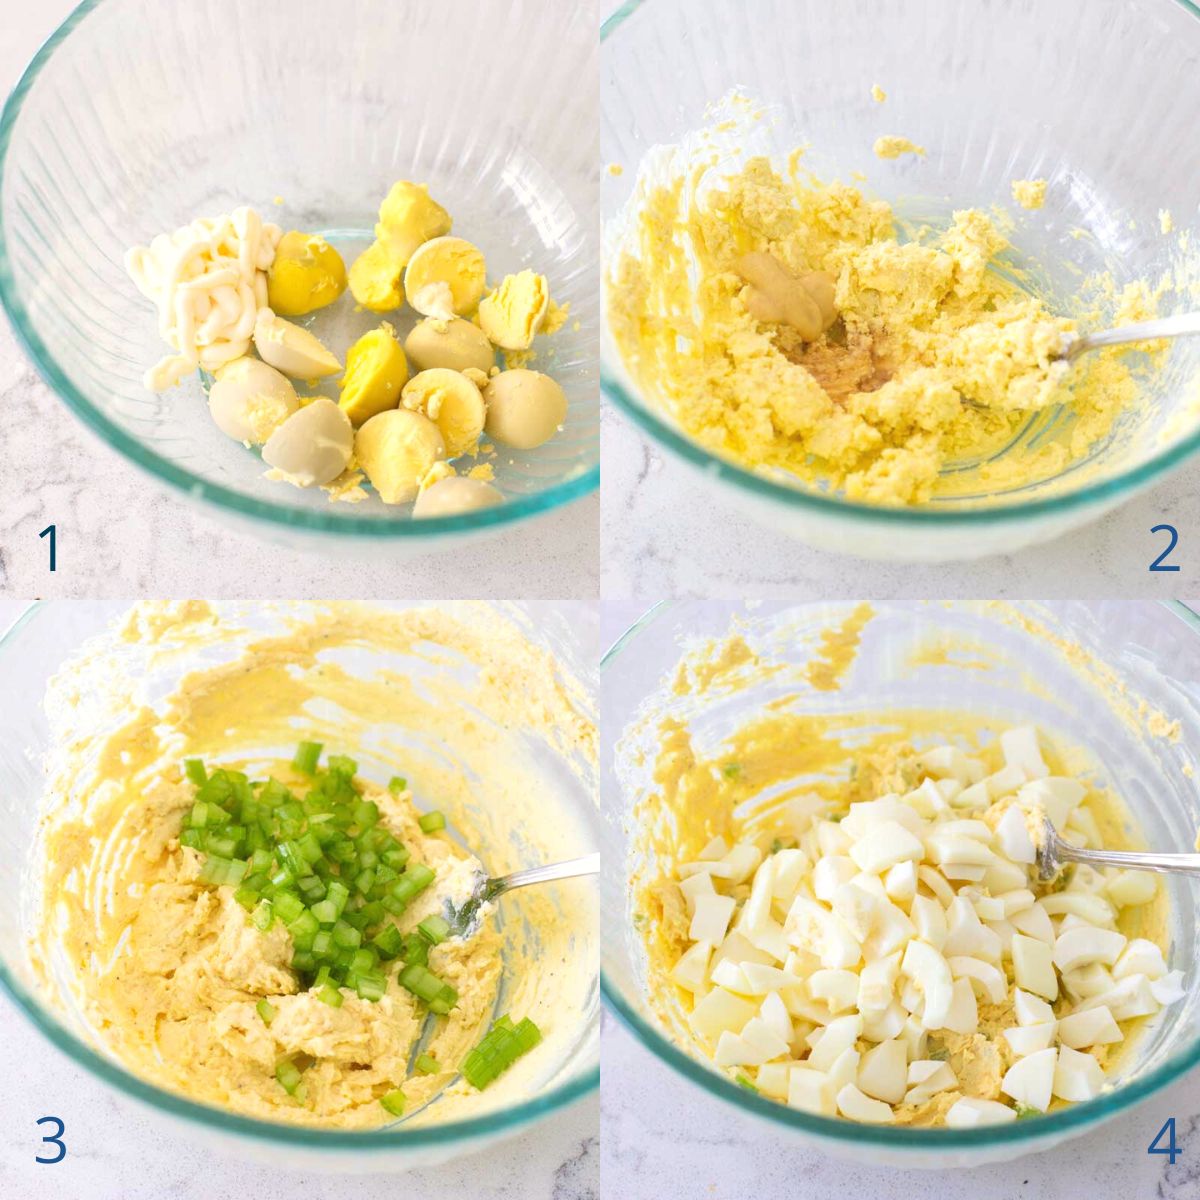 Step by step photos show how to make egg salad.